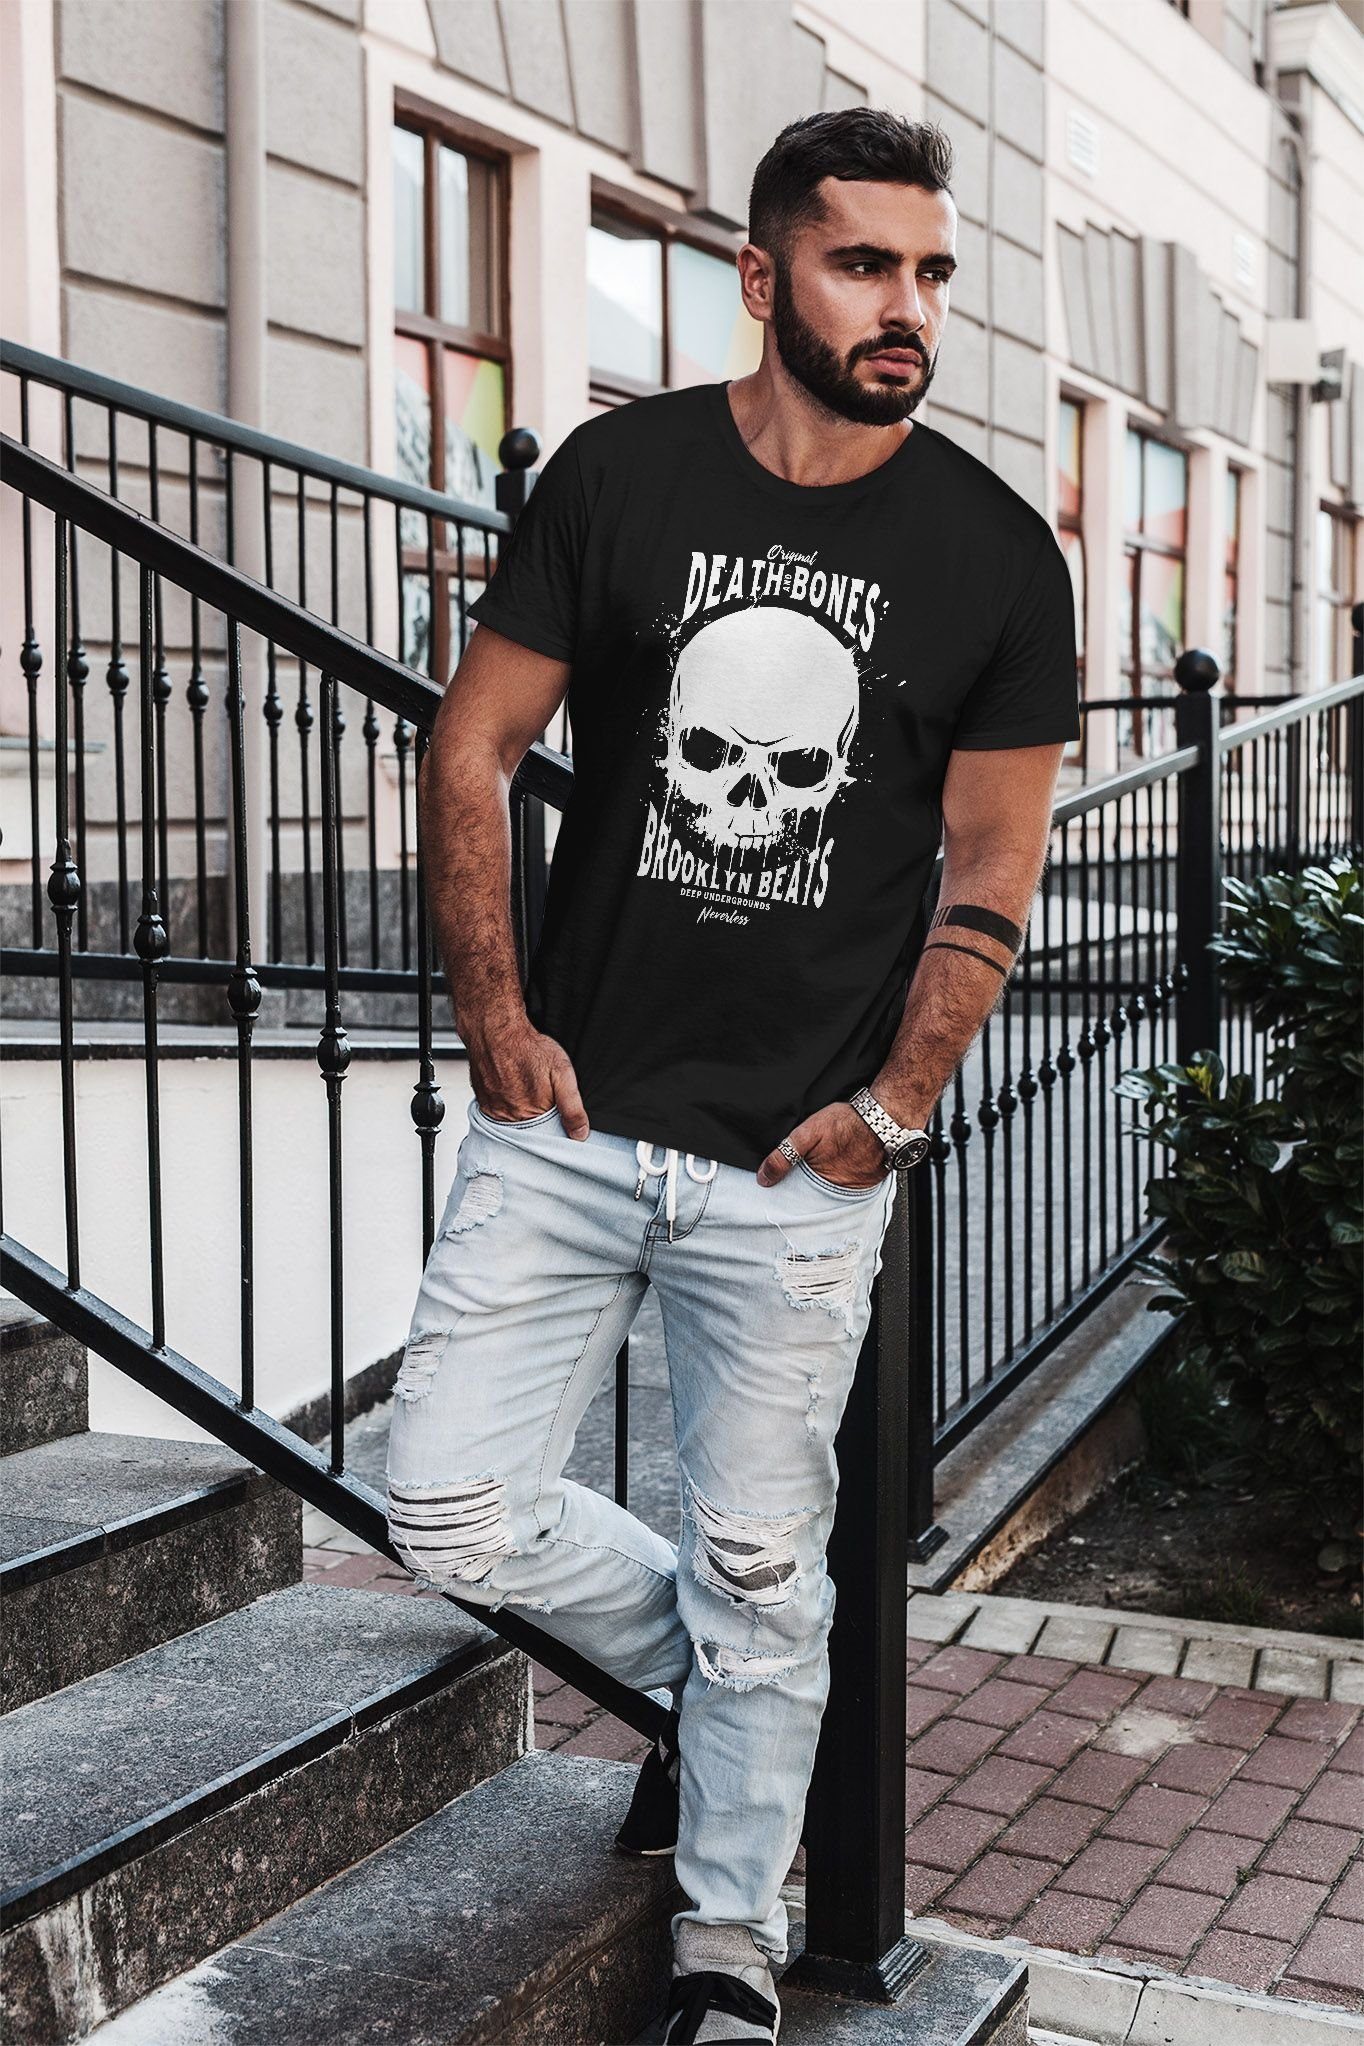 Skull T-Shirt Techno Neverless Herren and Print-Shirt Bones Logo Slim Print Fit Death mit Neverless® schwarz